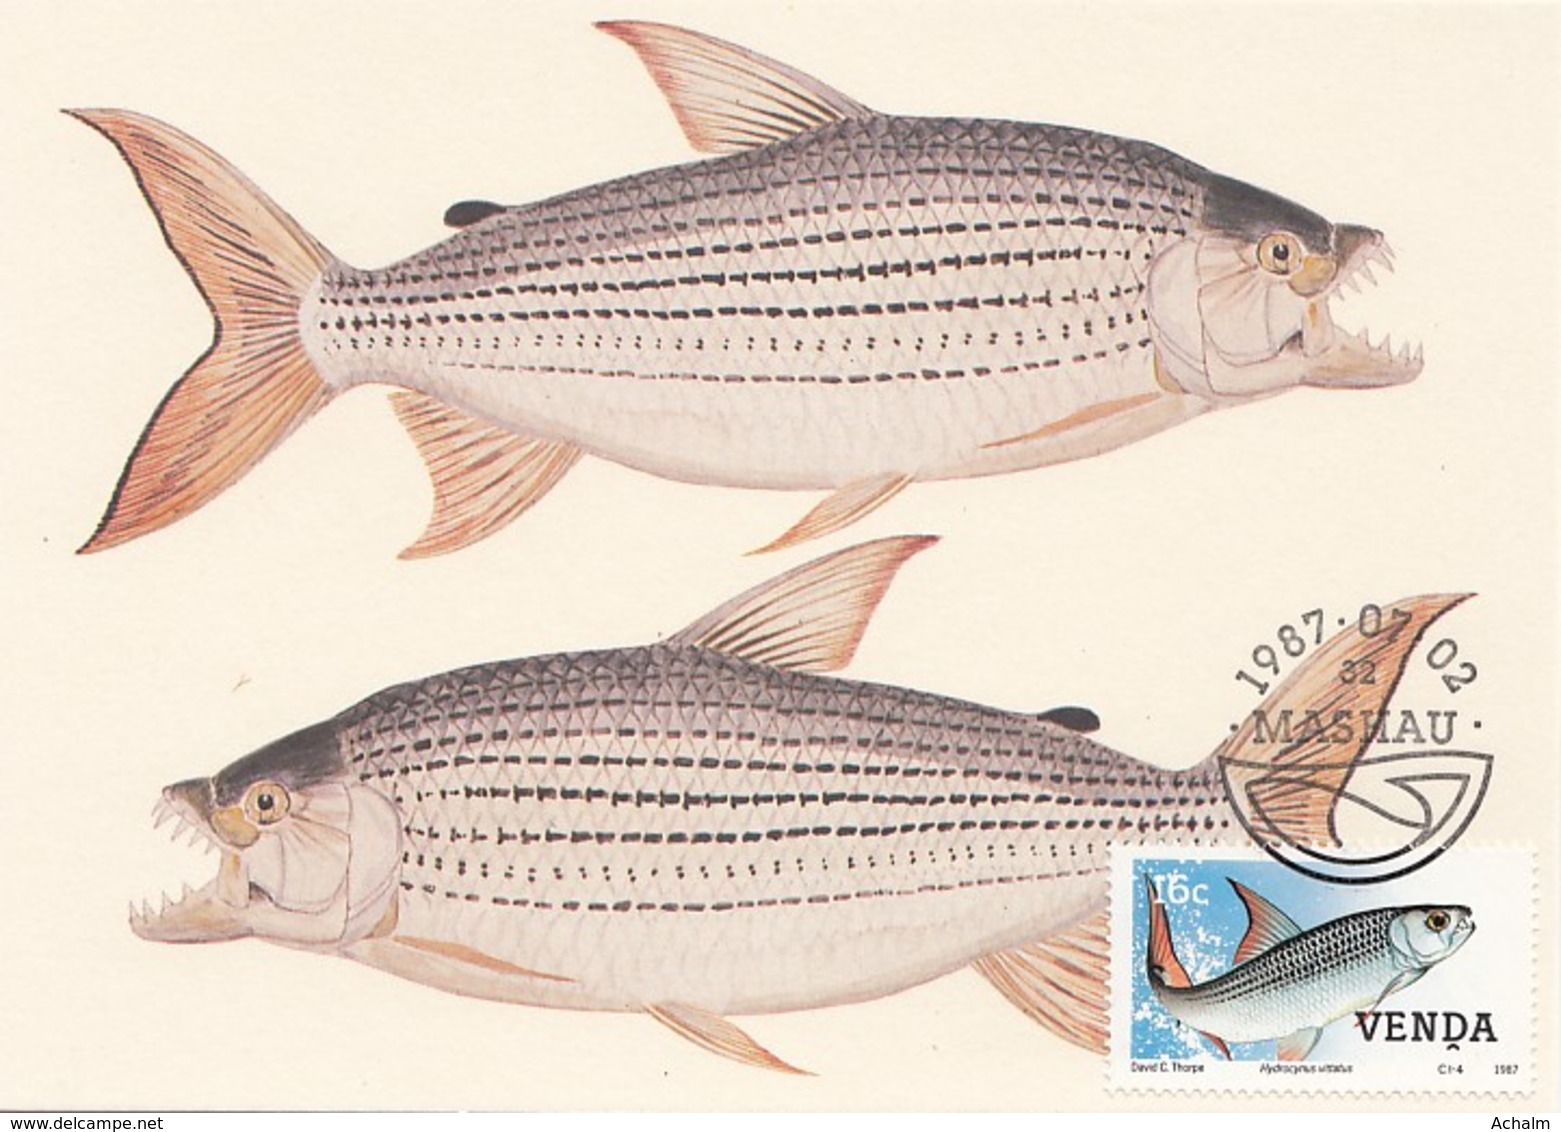 Venda - Maximum Card Of 1987 - MiNr. 159 - Freshwater Fish - Hydrocynus Vittatus - Venda